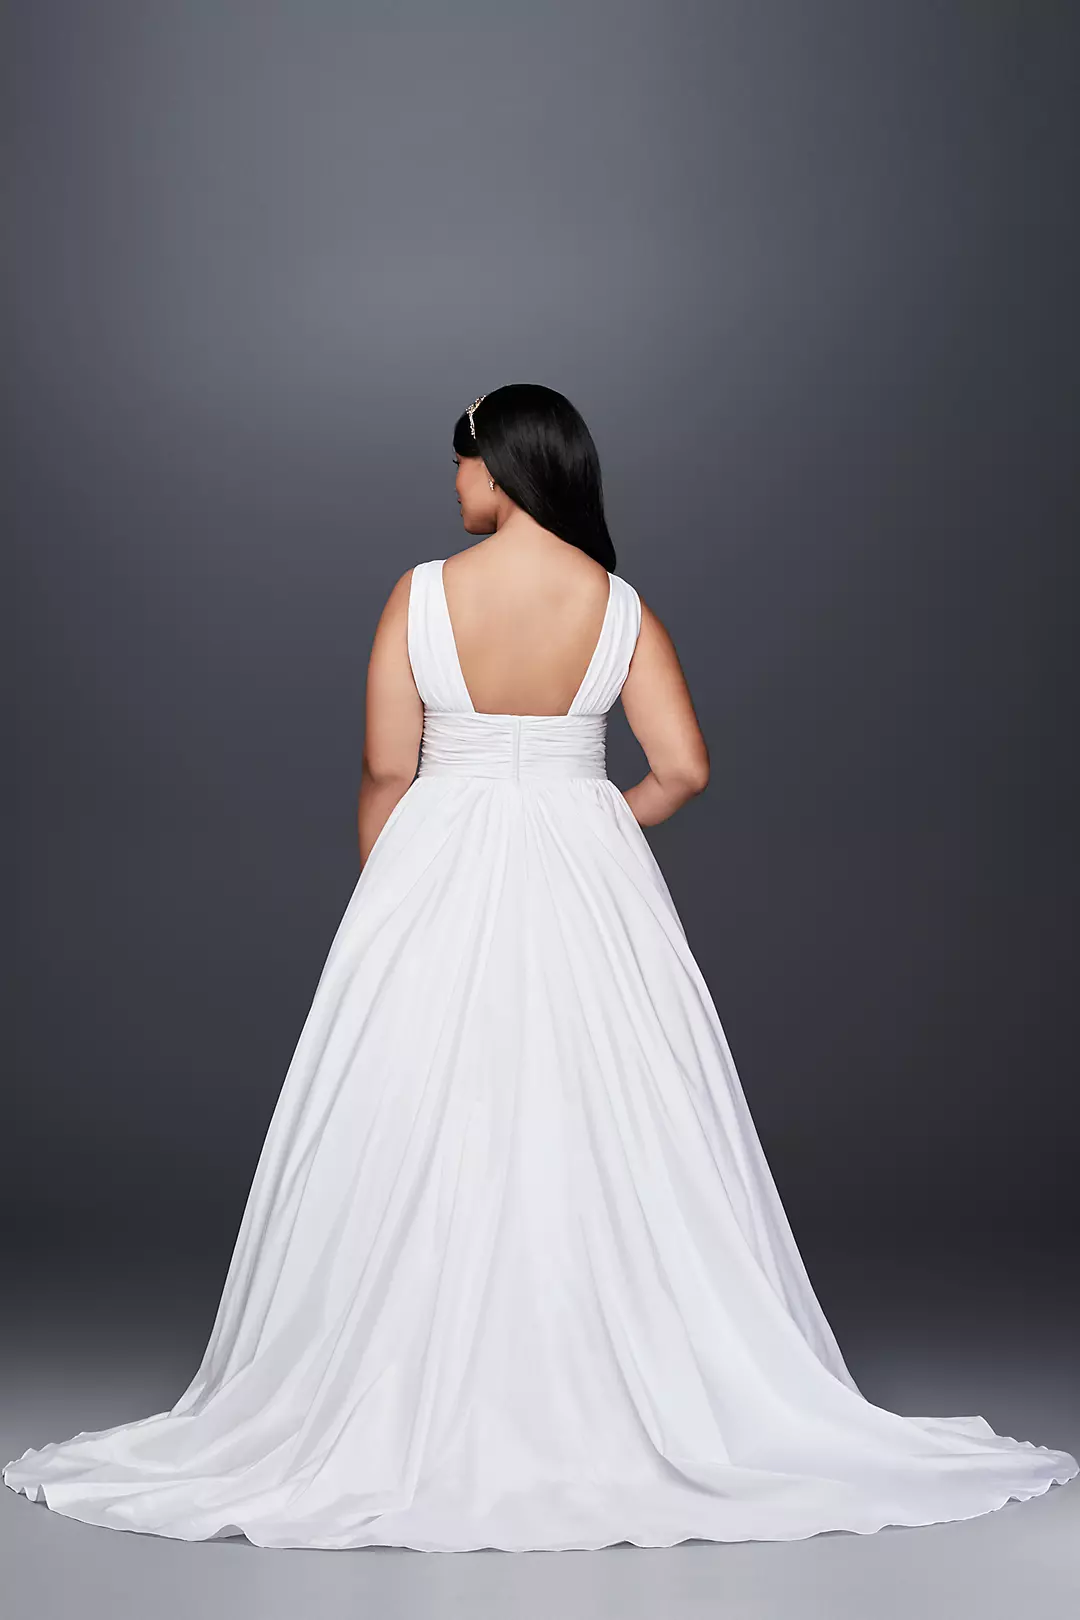 High-Neck Taffeta Plus Size Wedding Ball Gown Image 2